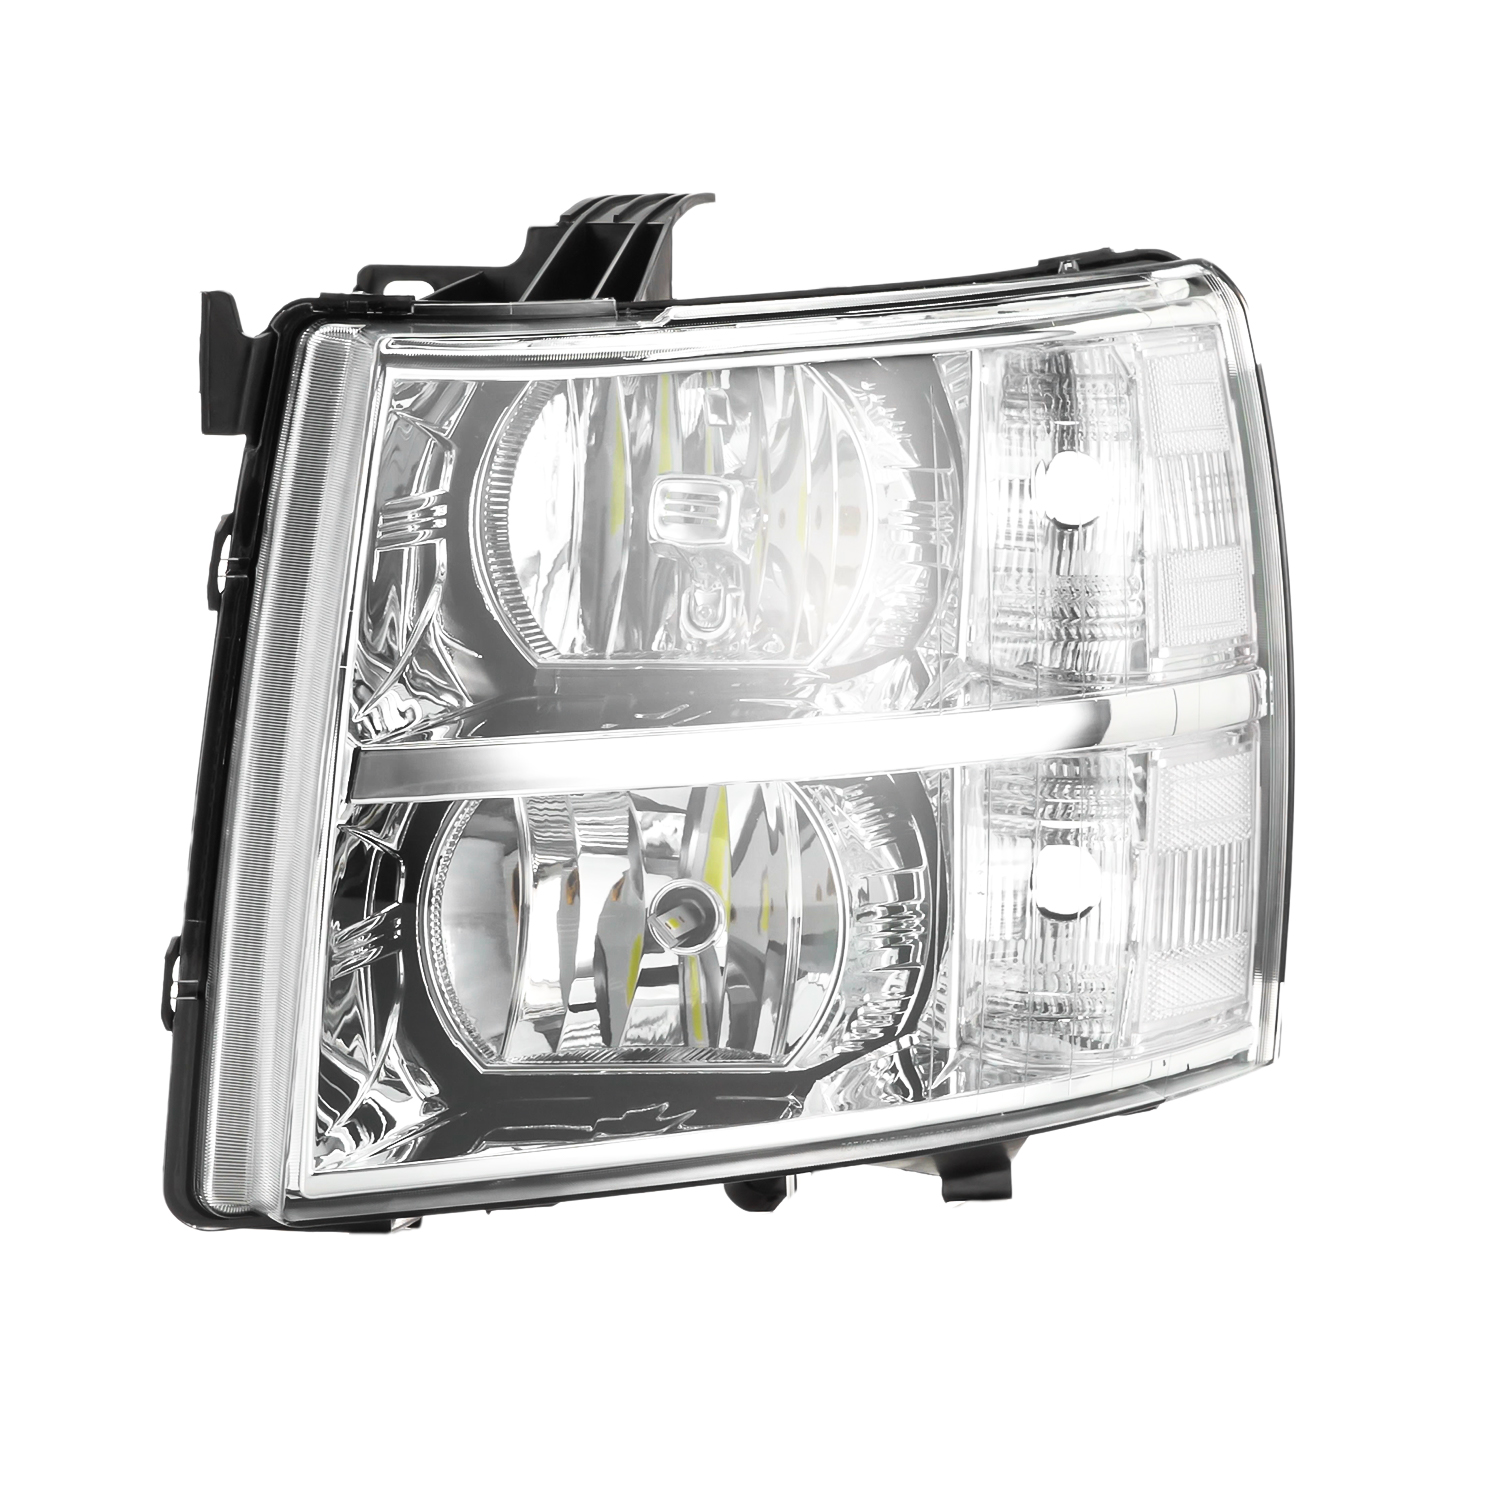 M-AUTO Pair Headlight Assembly for 07-14 Chevy Silverado 1500